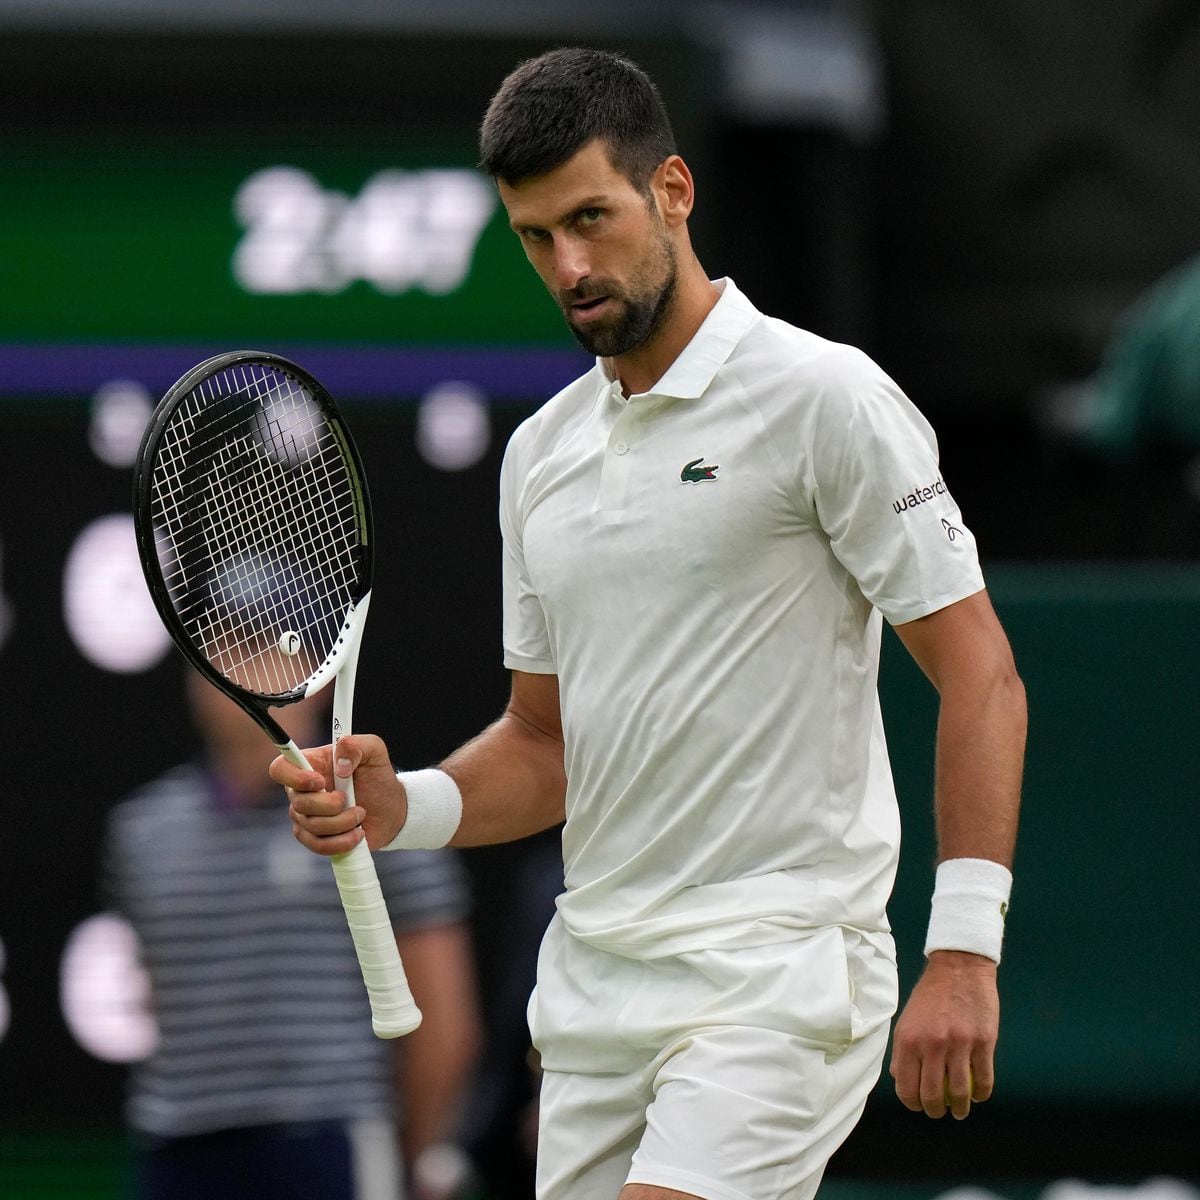 Djokovic bate Sinner, se garante na final e mira 8º título em Wimbledon